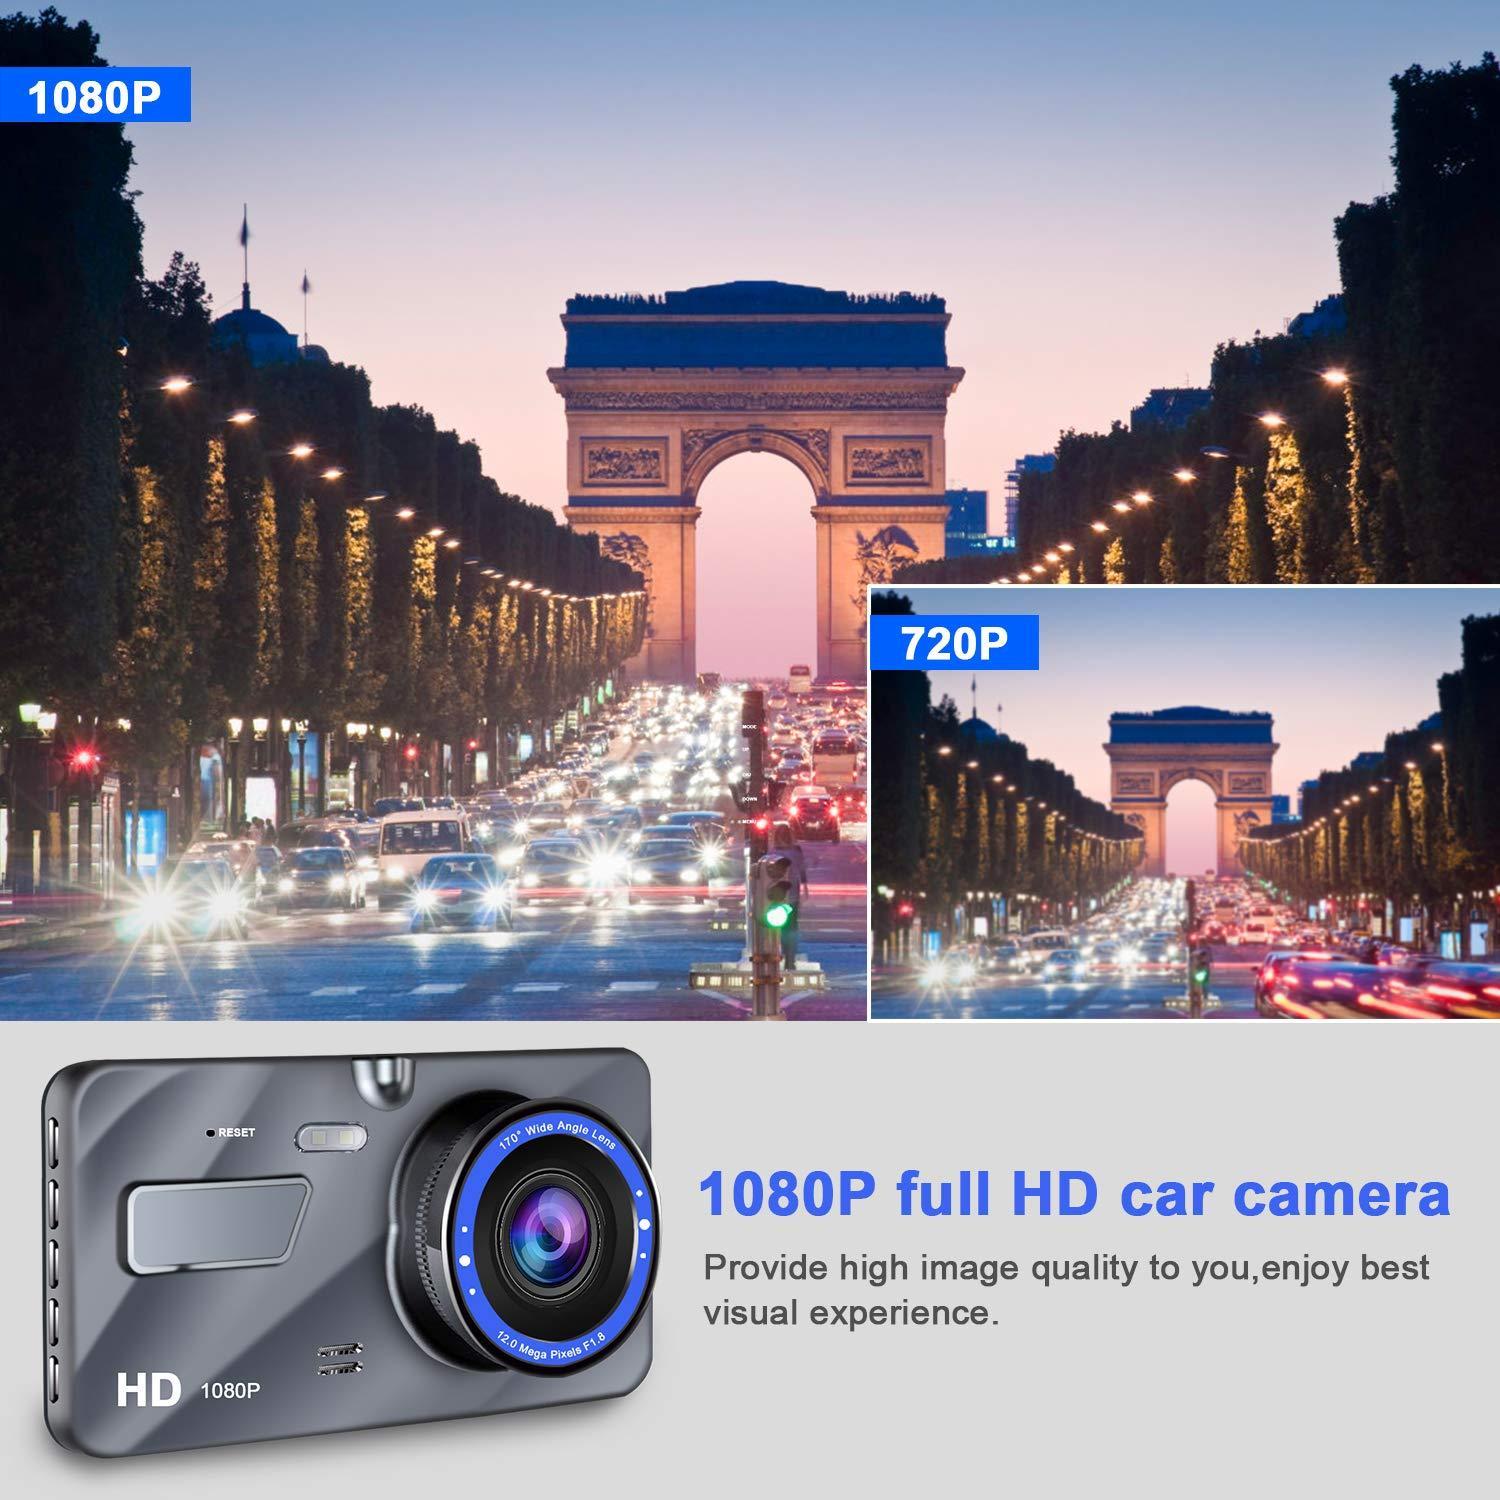 【Car Camera】กล้องติดรถยนต์ รุ่นใหม่ล่าสุด Full HD Car Camera หน้า-หลัง WDR+HRD หน้าจอใหญ่ 4.0 รุ่น A10 ของแท้100%